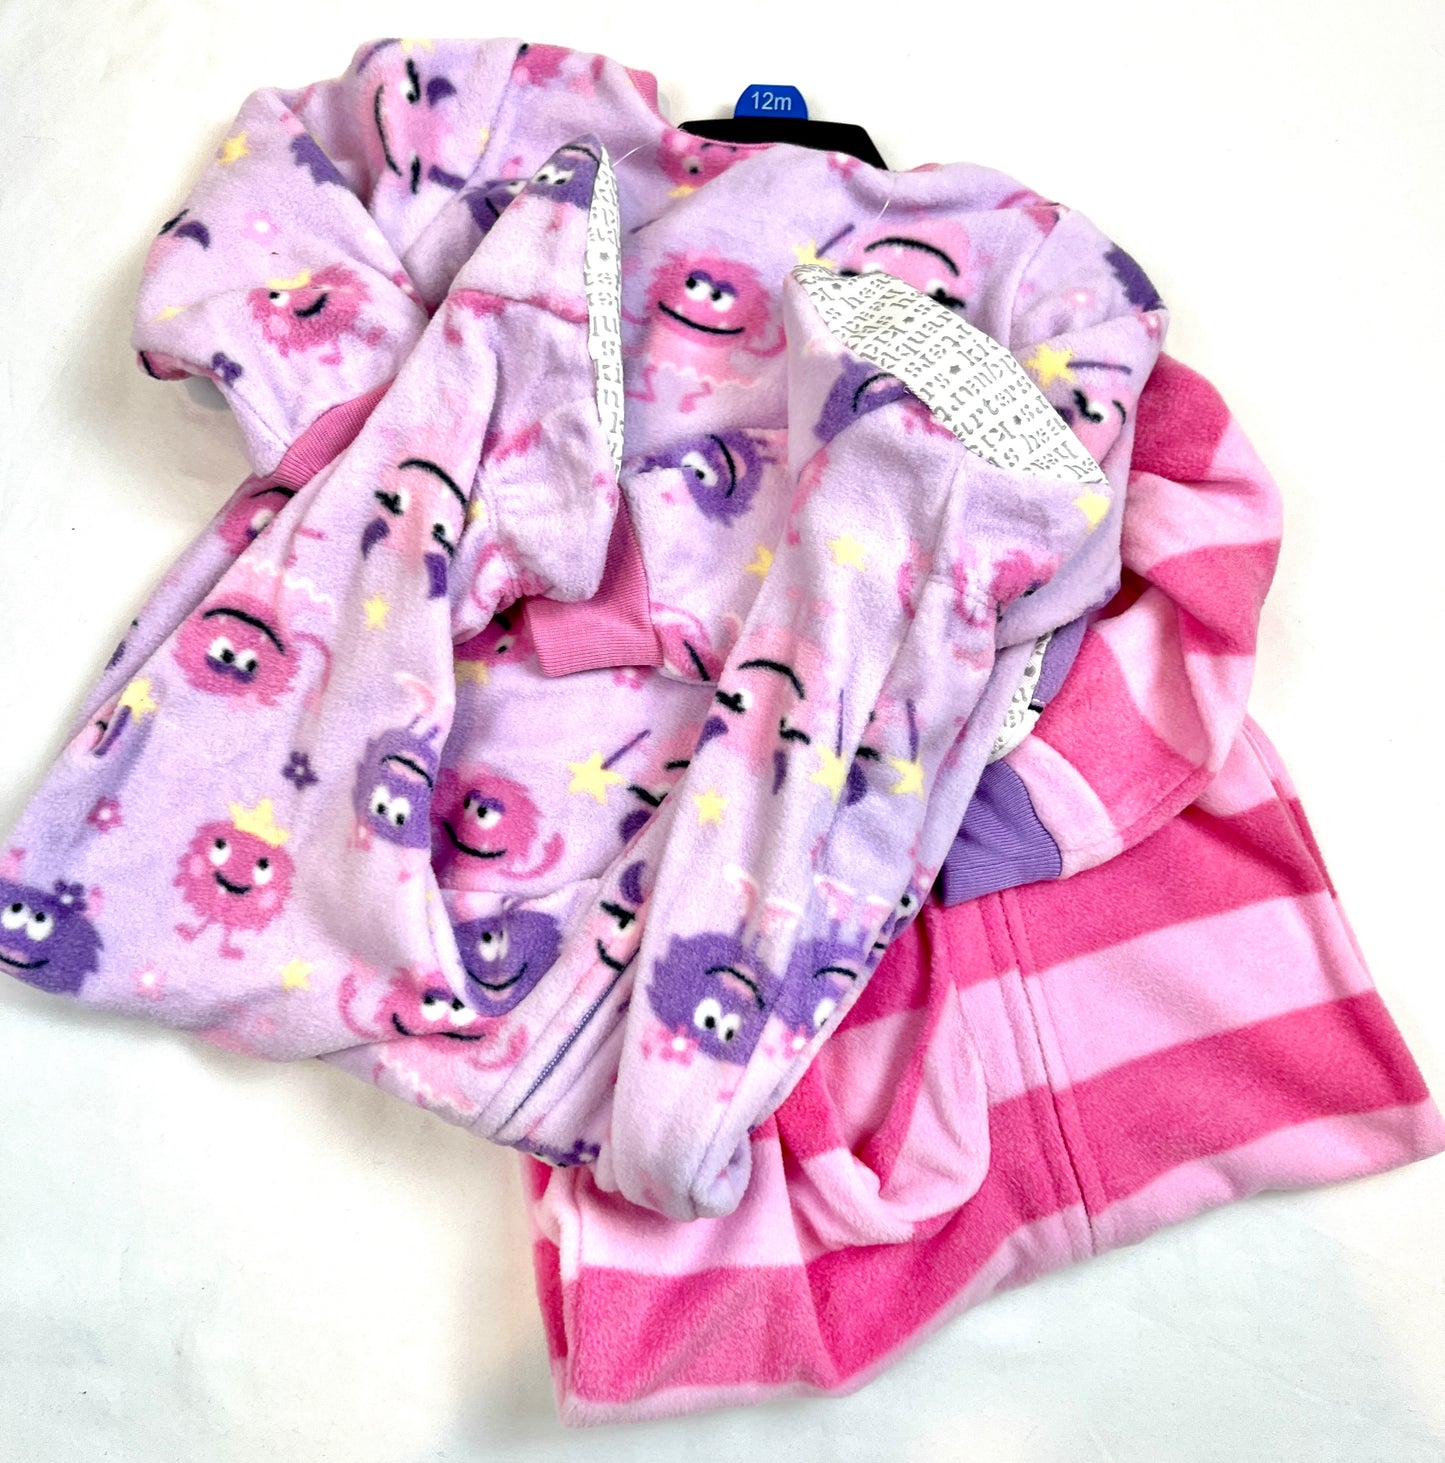 Girls 12M (2) NEW NWT Fleece Footed Jammies PJ's Pajamas Sleeper Pink Purple Monster Stripe